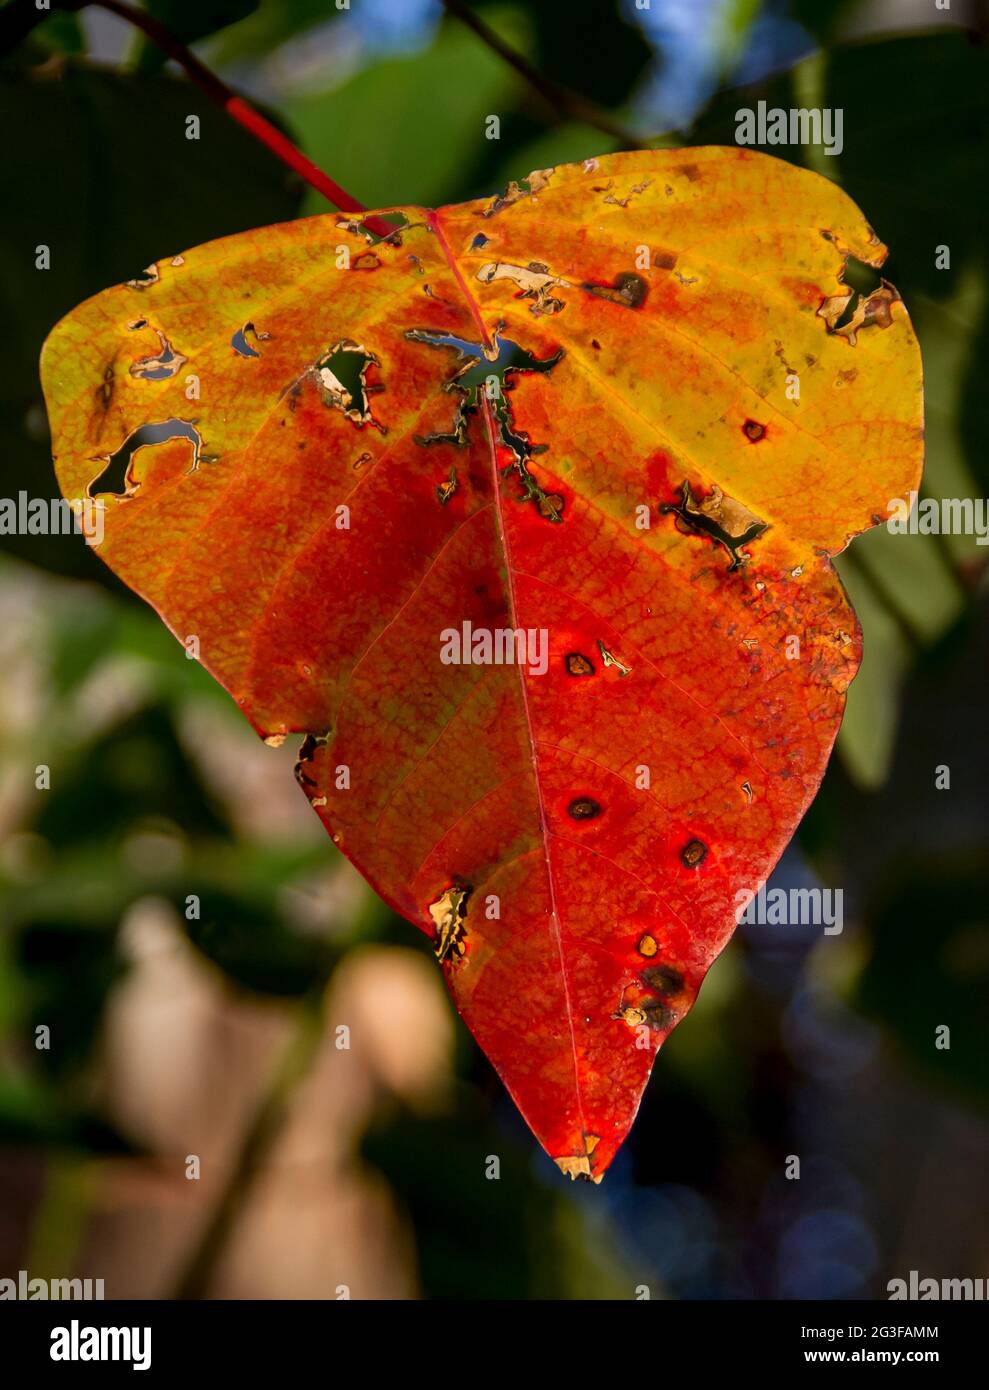 Red and yellow senescent leaf of Bleeding Heart Tree (Homalanthus populifolius). Pioneer species of tree, subropical rainforest, Queensland, Australia. Stock Photo